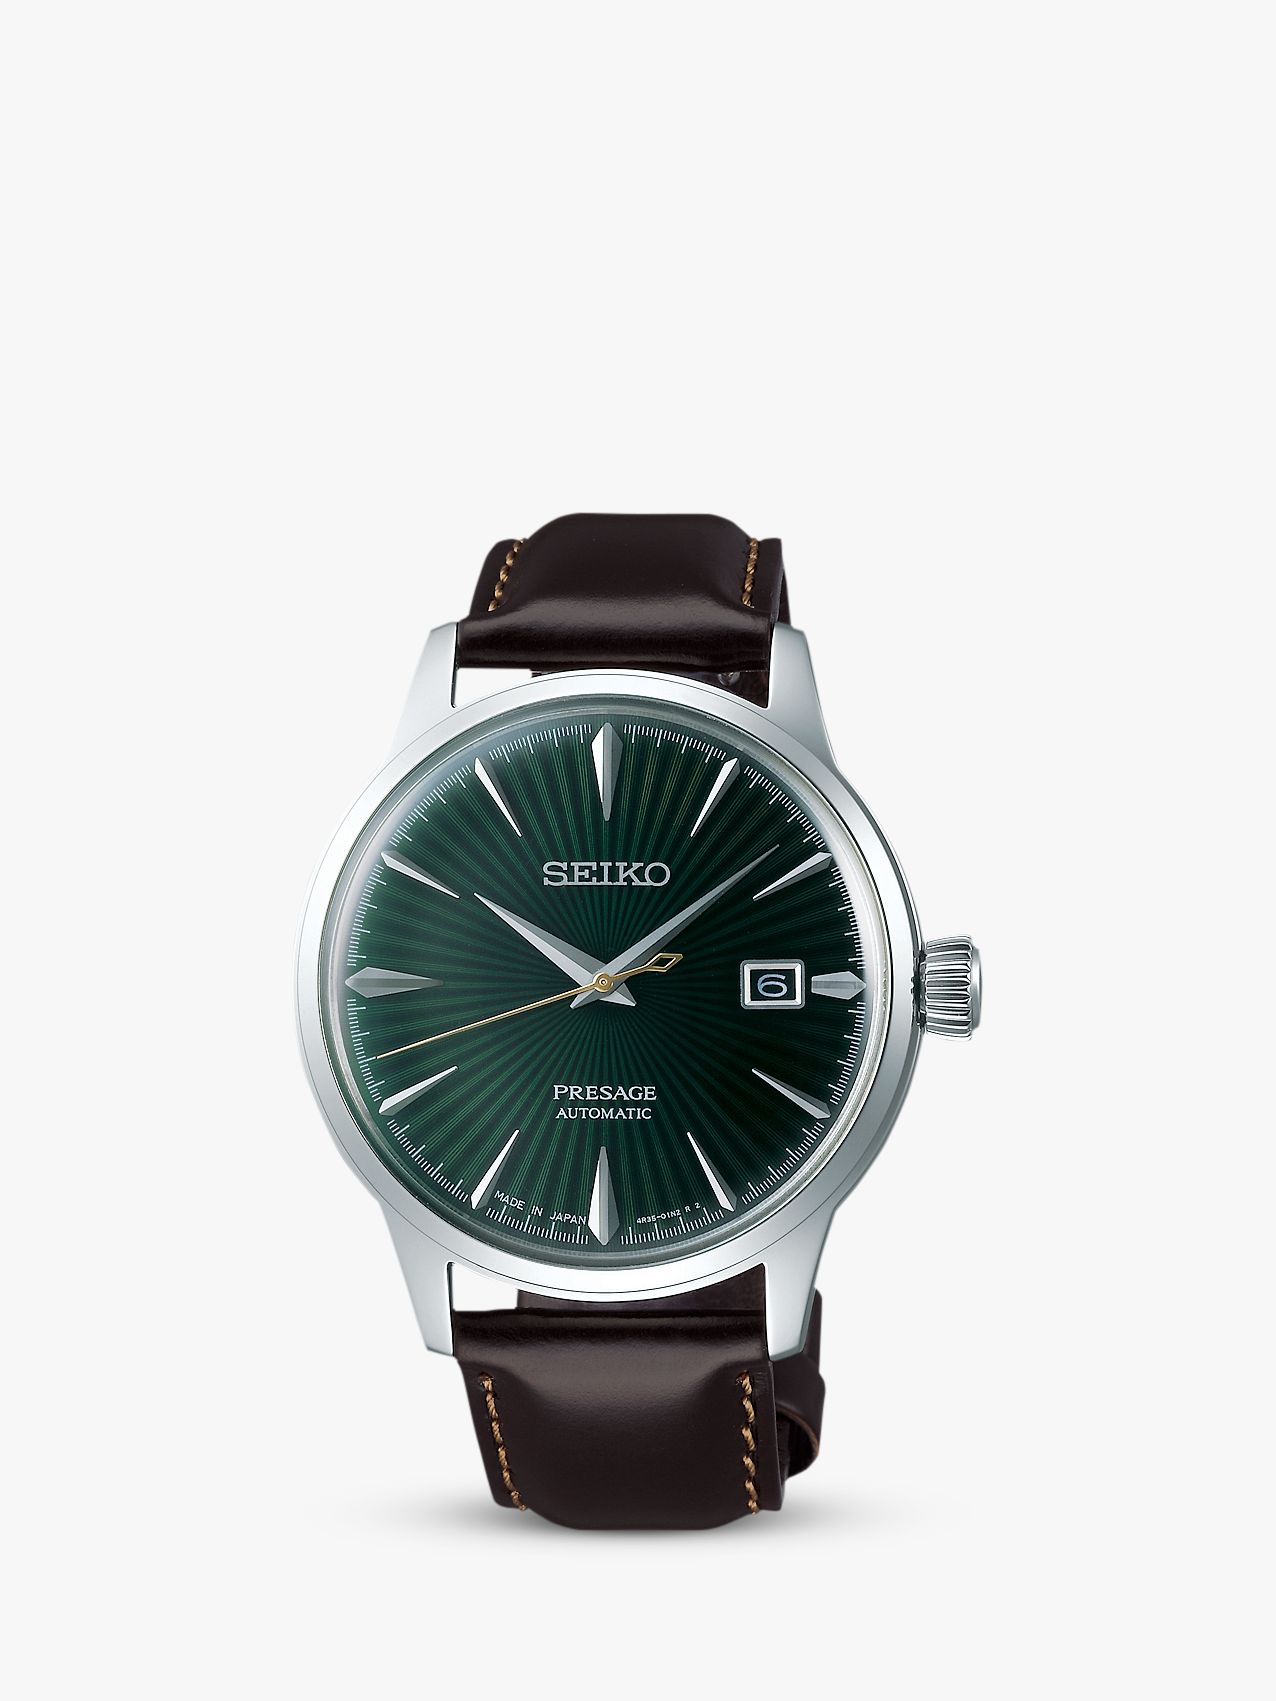 Seiko Men's Presage Automatic Date Leather Strap Watch, Black/Green  SRPD37J1 at John Lewis & Partners